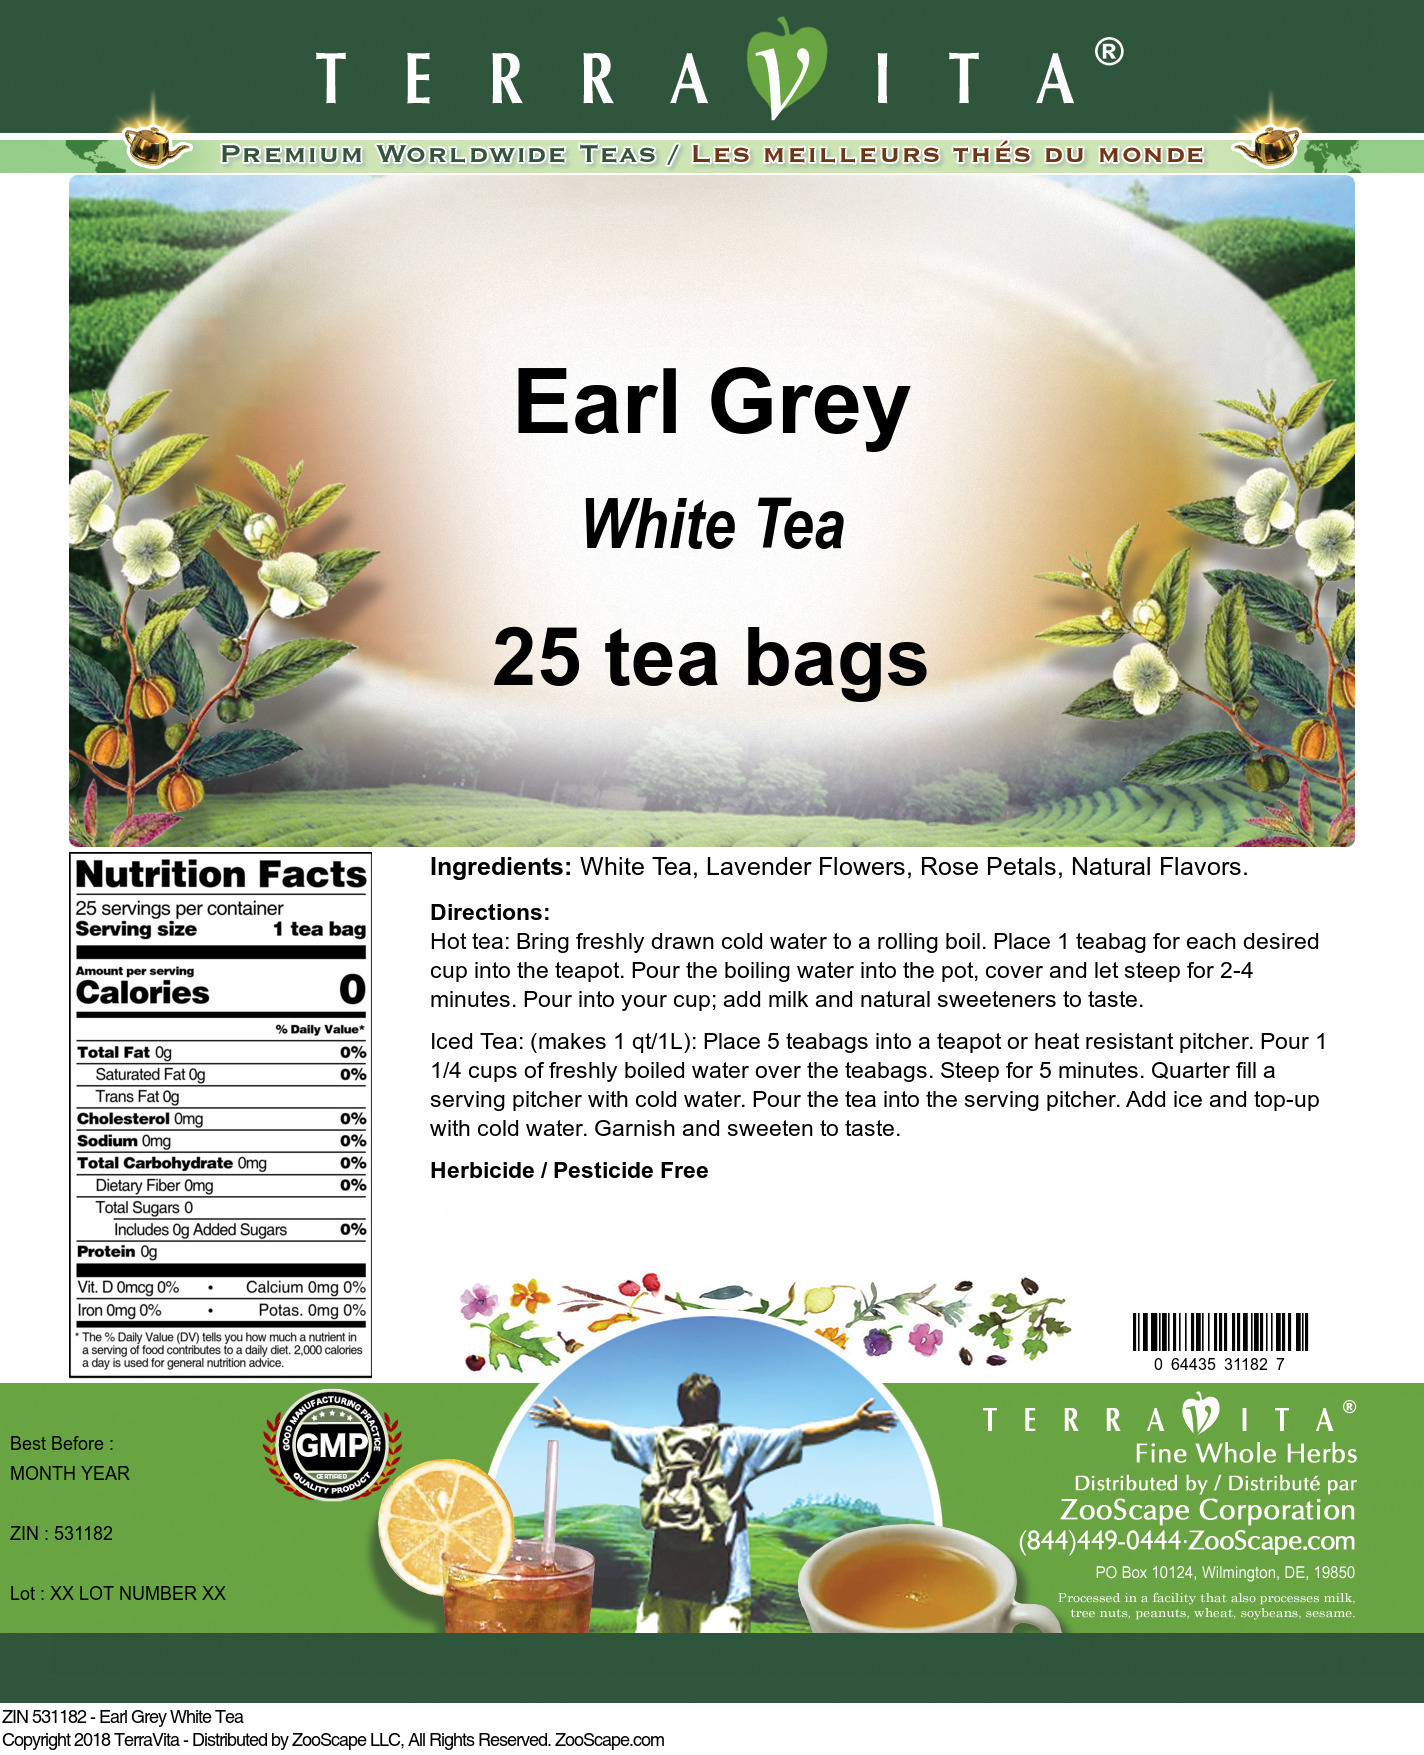 Earl Grey White Tea - Label